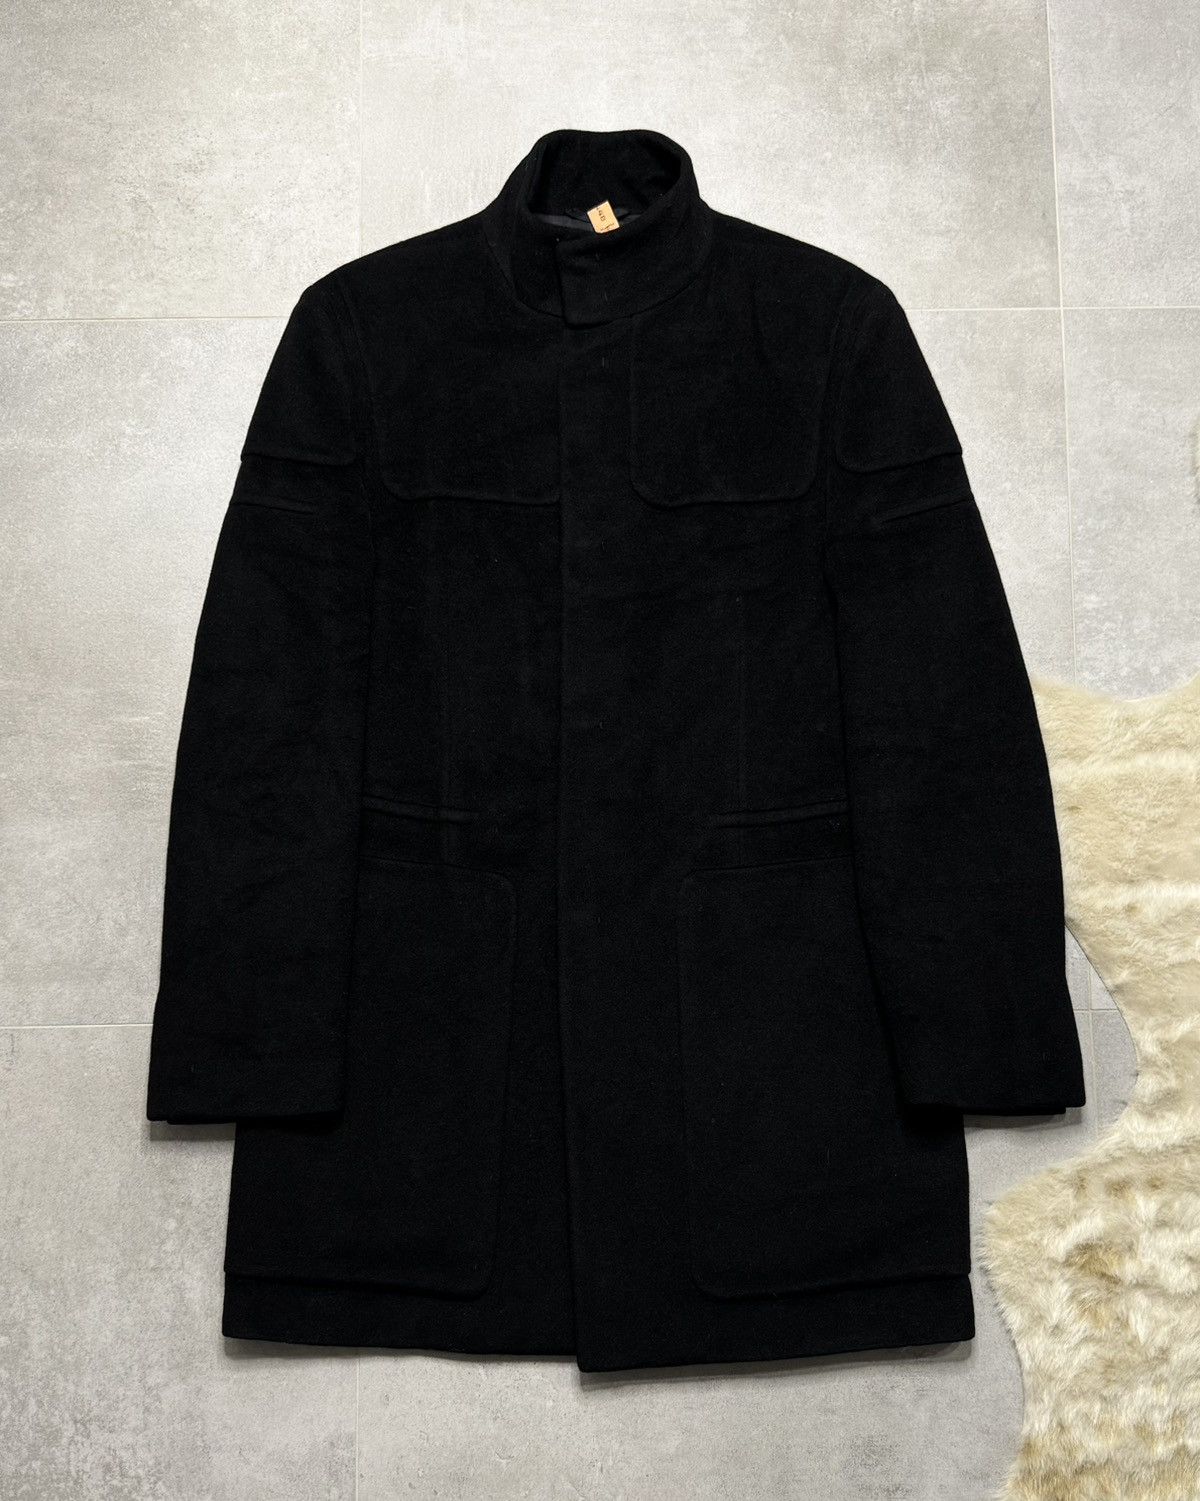 Jil Sander Tailor Made Coat | Grailed